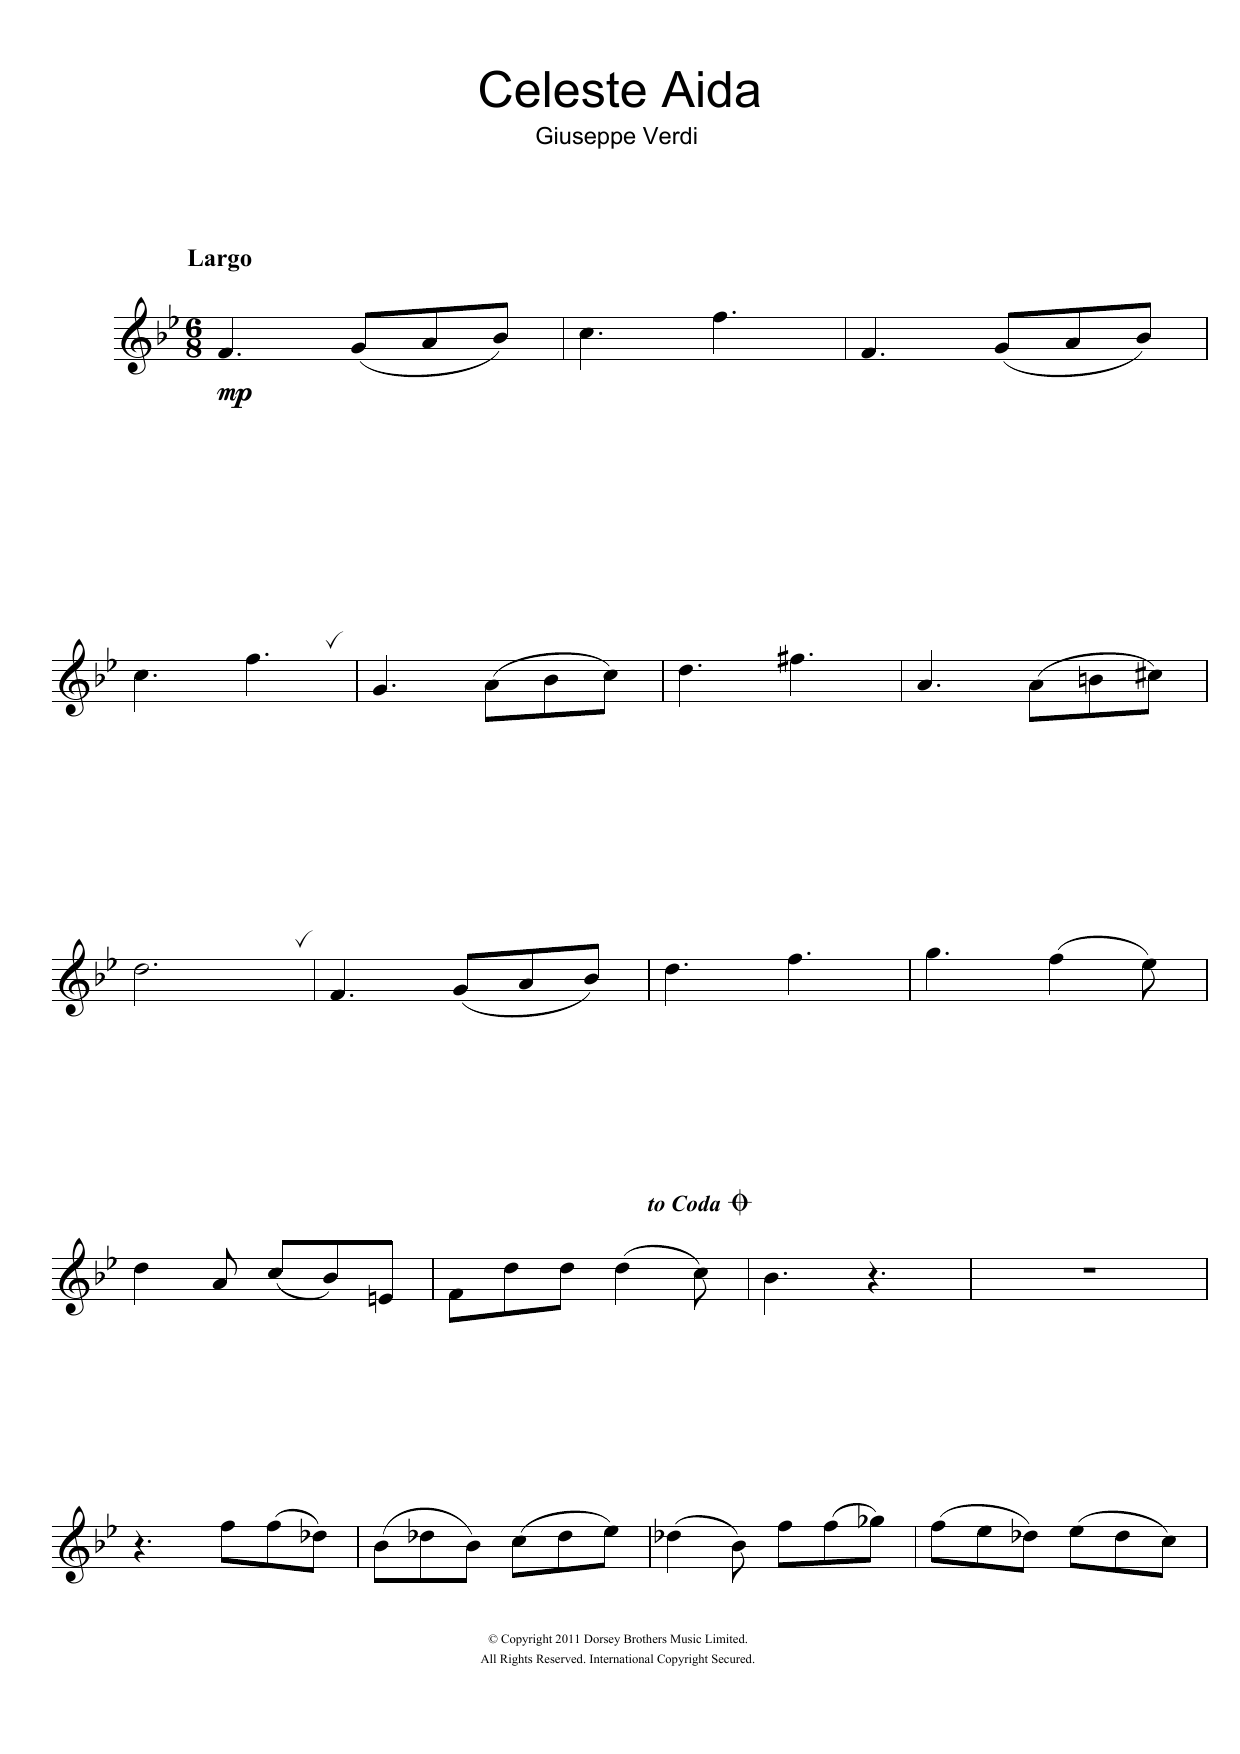 Giuseppe Verdi Celeste Aida (from Aida) Sheet Music Notes & Chords for Alto Saxophone - Download or Print PDF